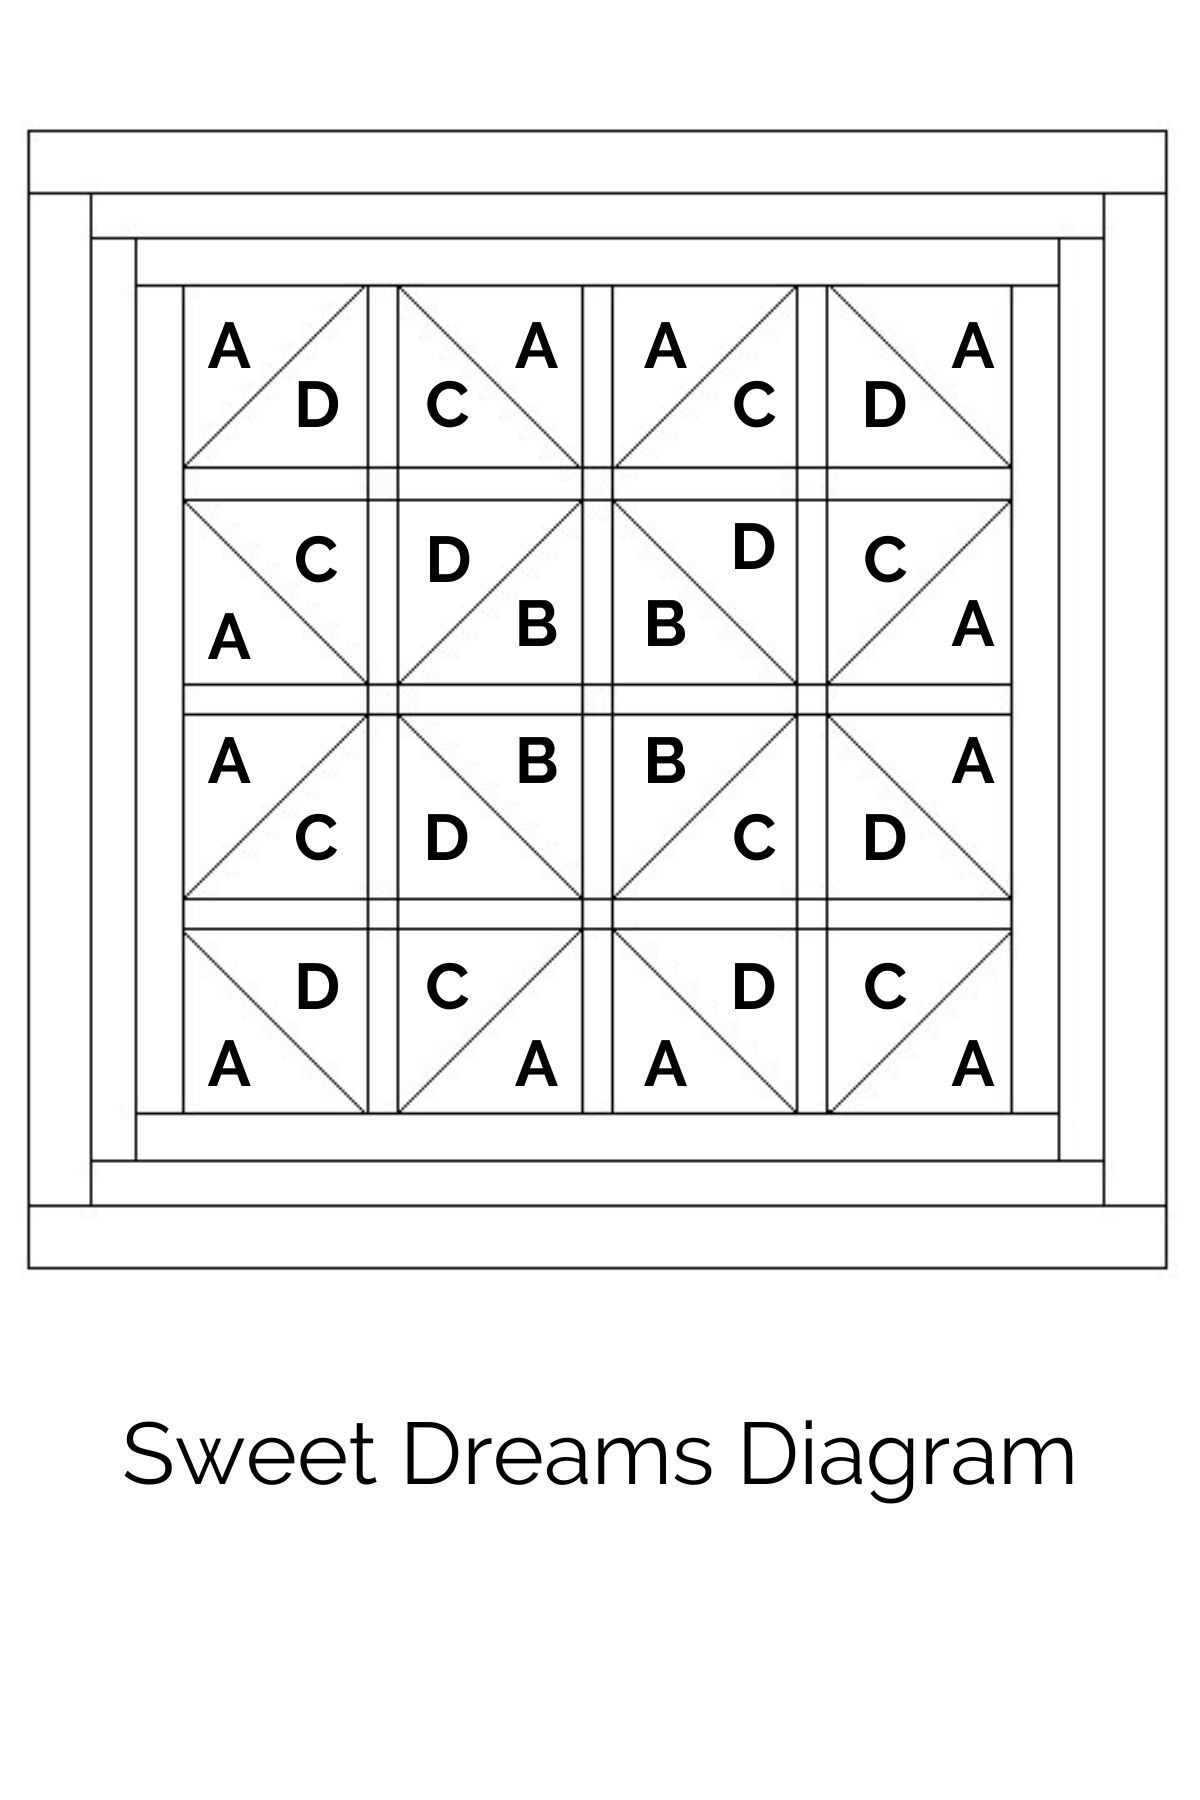 Sweet Dreams Diagram